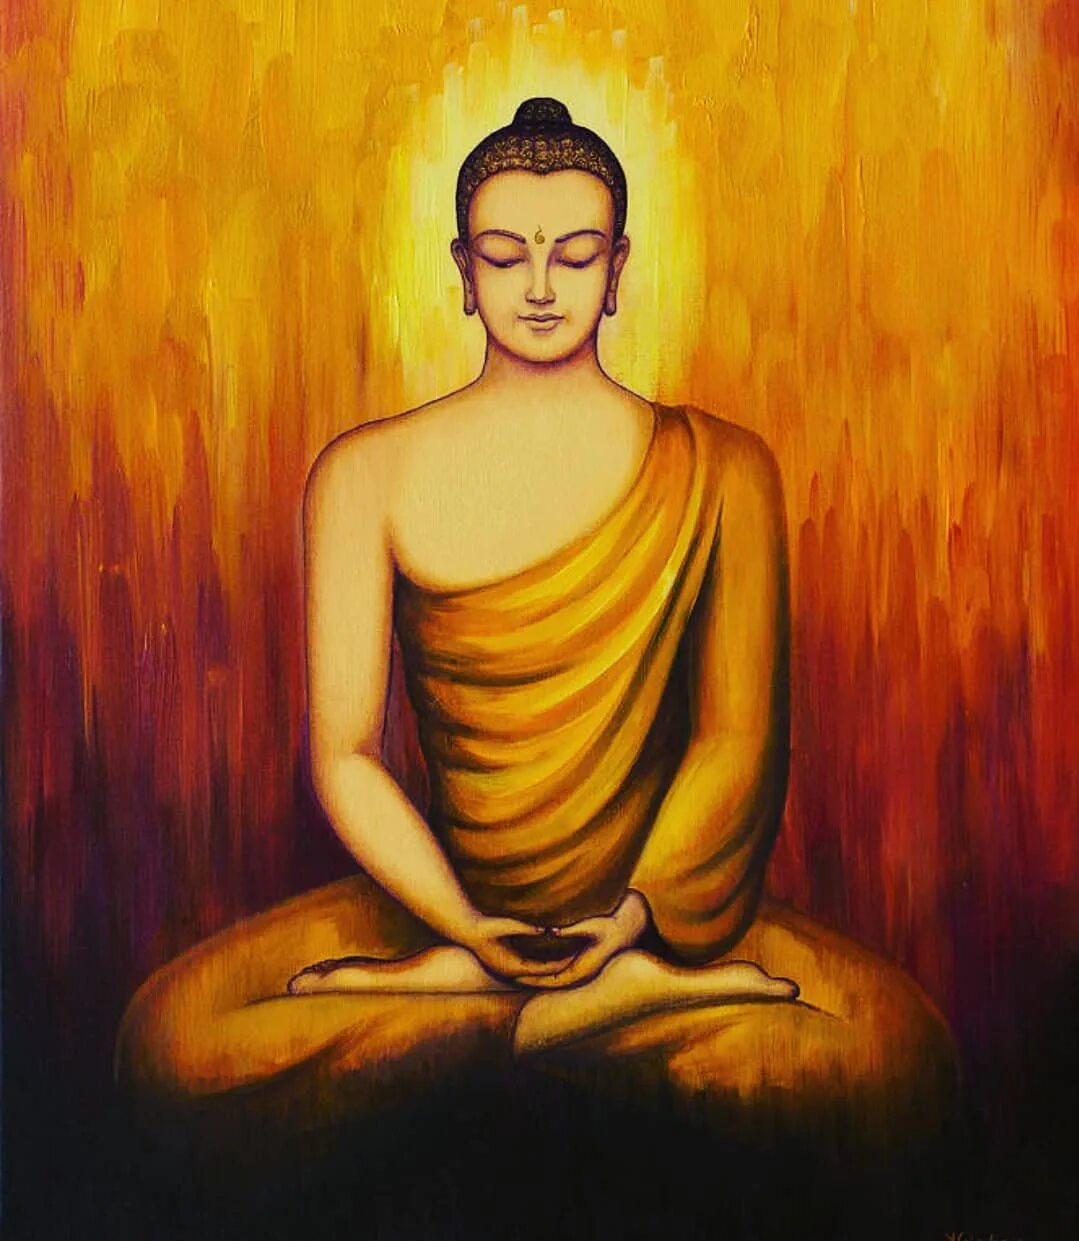 Будда живопись Тхеравада. Бодхисаттва Будда Шакьямуни Гаутама. Будда Шакьямуни портрет. Гаутама Будда Випассана. Расы для будды